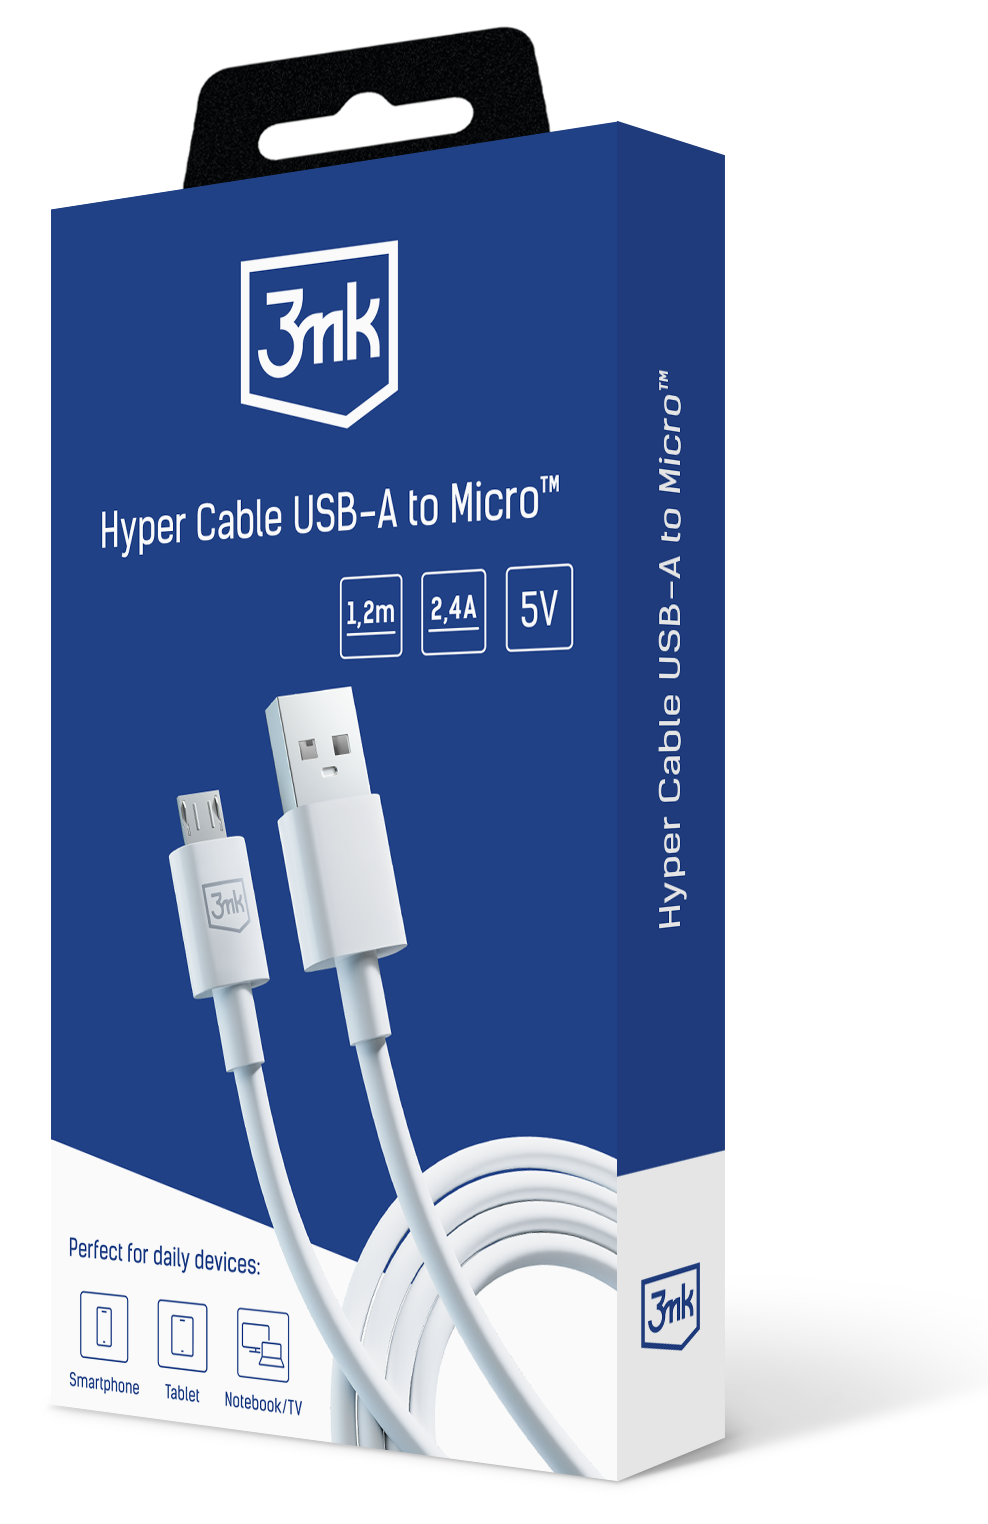 3mk-hyper-cable-C-to-Micro_white-packshot-b